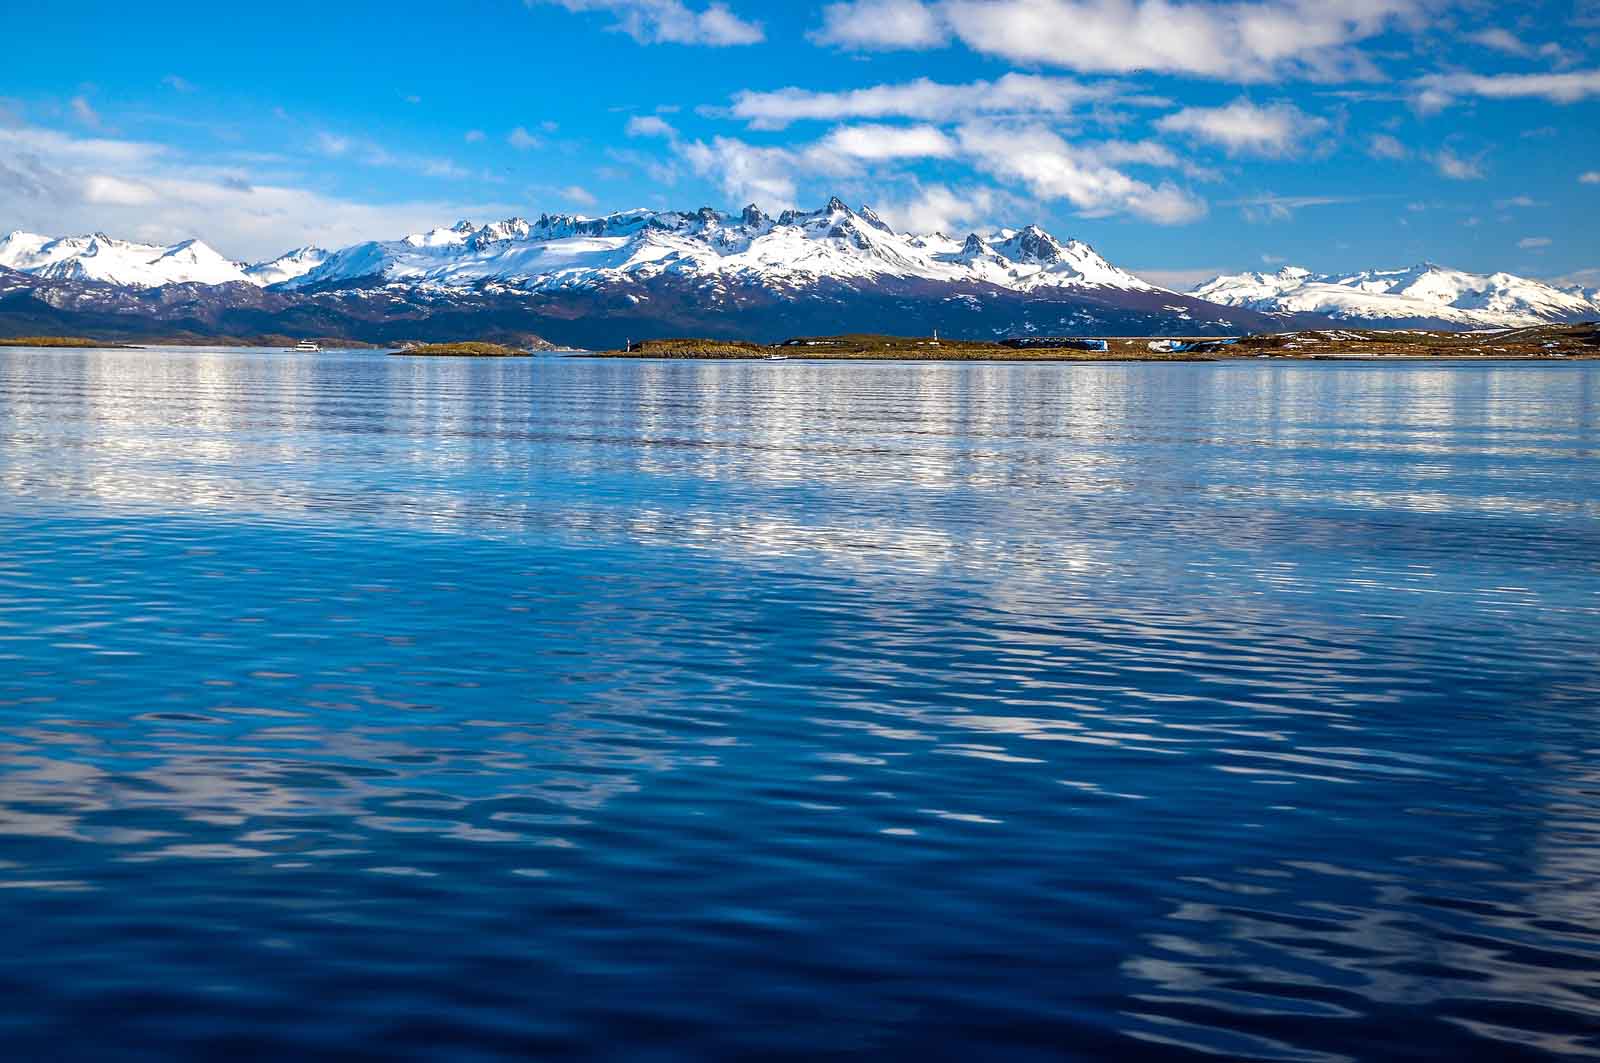 Essential Patagonia: Chilean Fjords and Torres del Paine